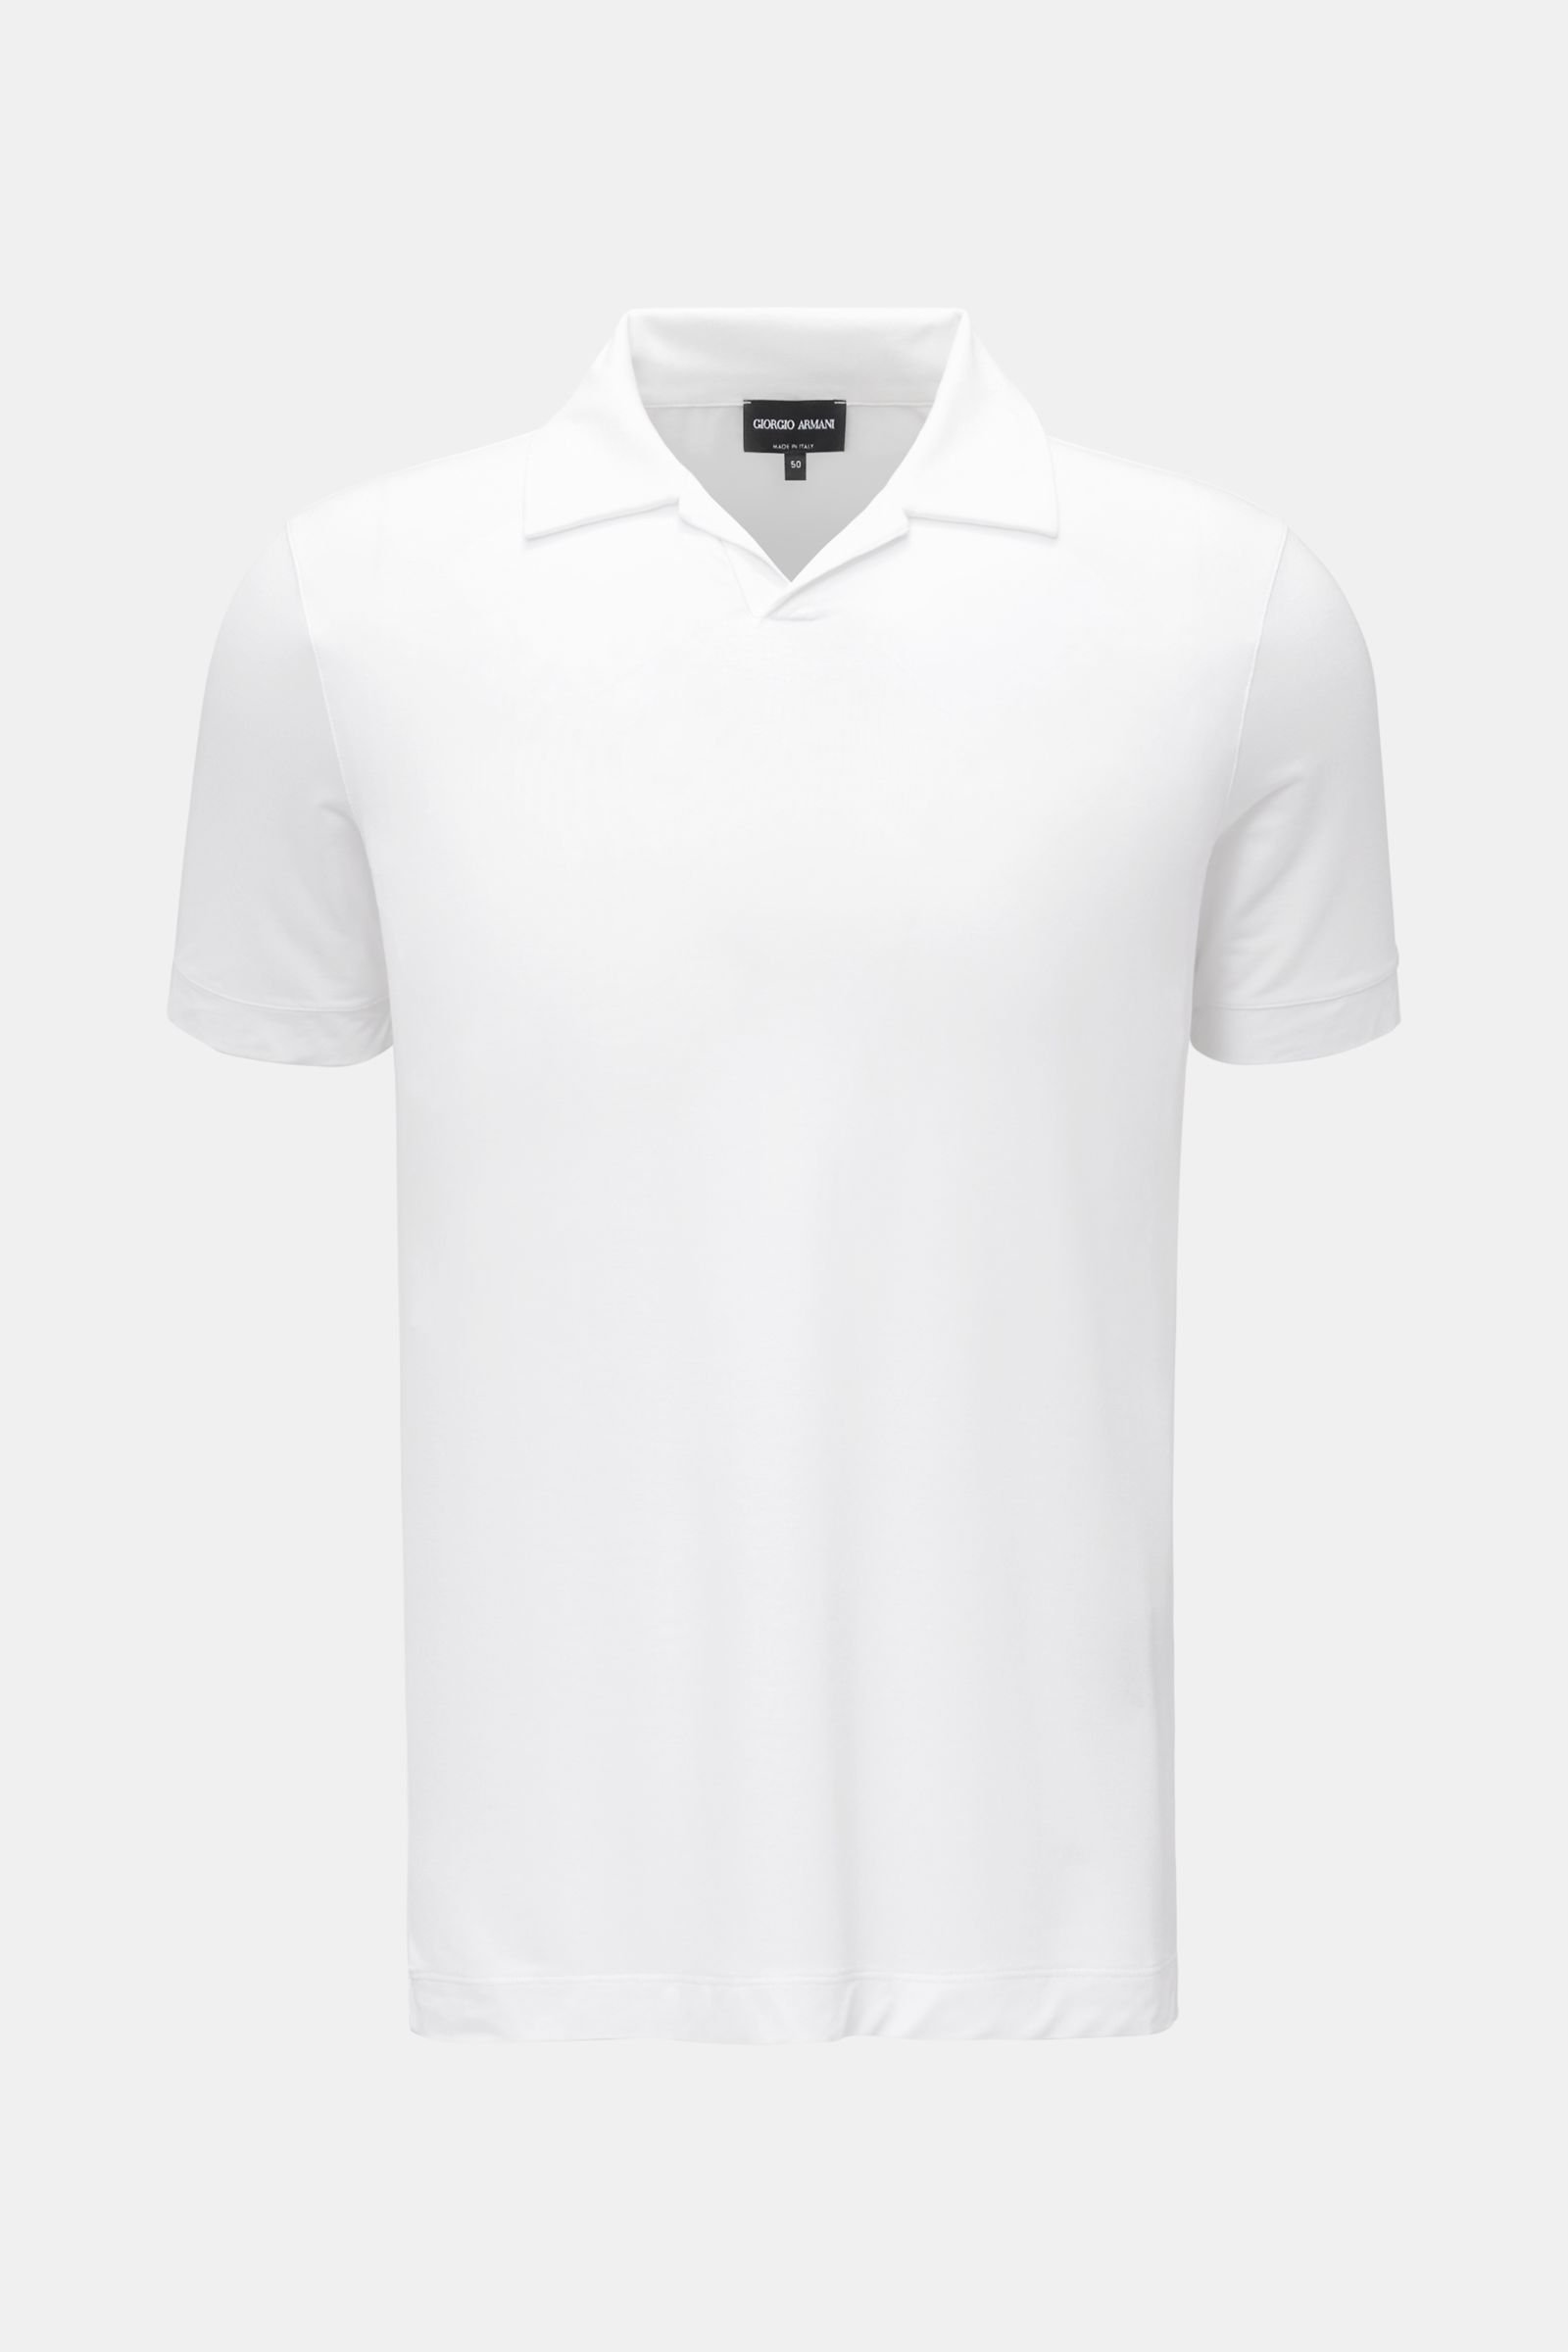 Jersey-polo shirt white